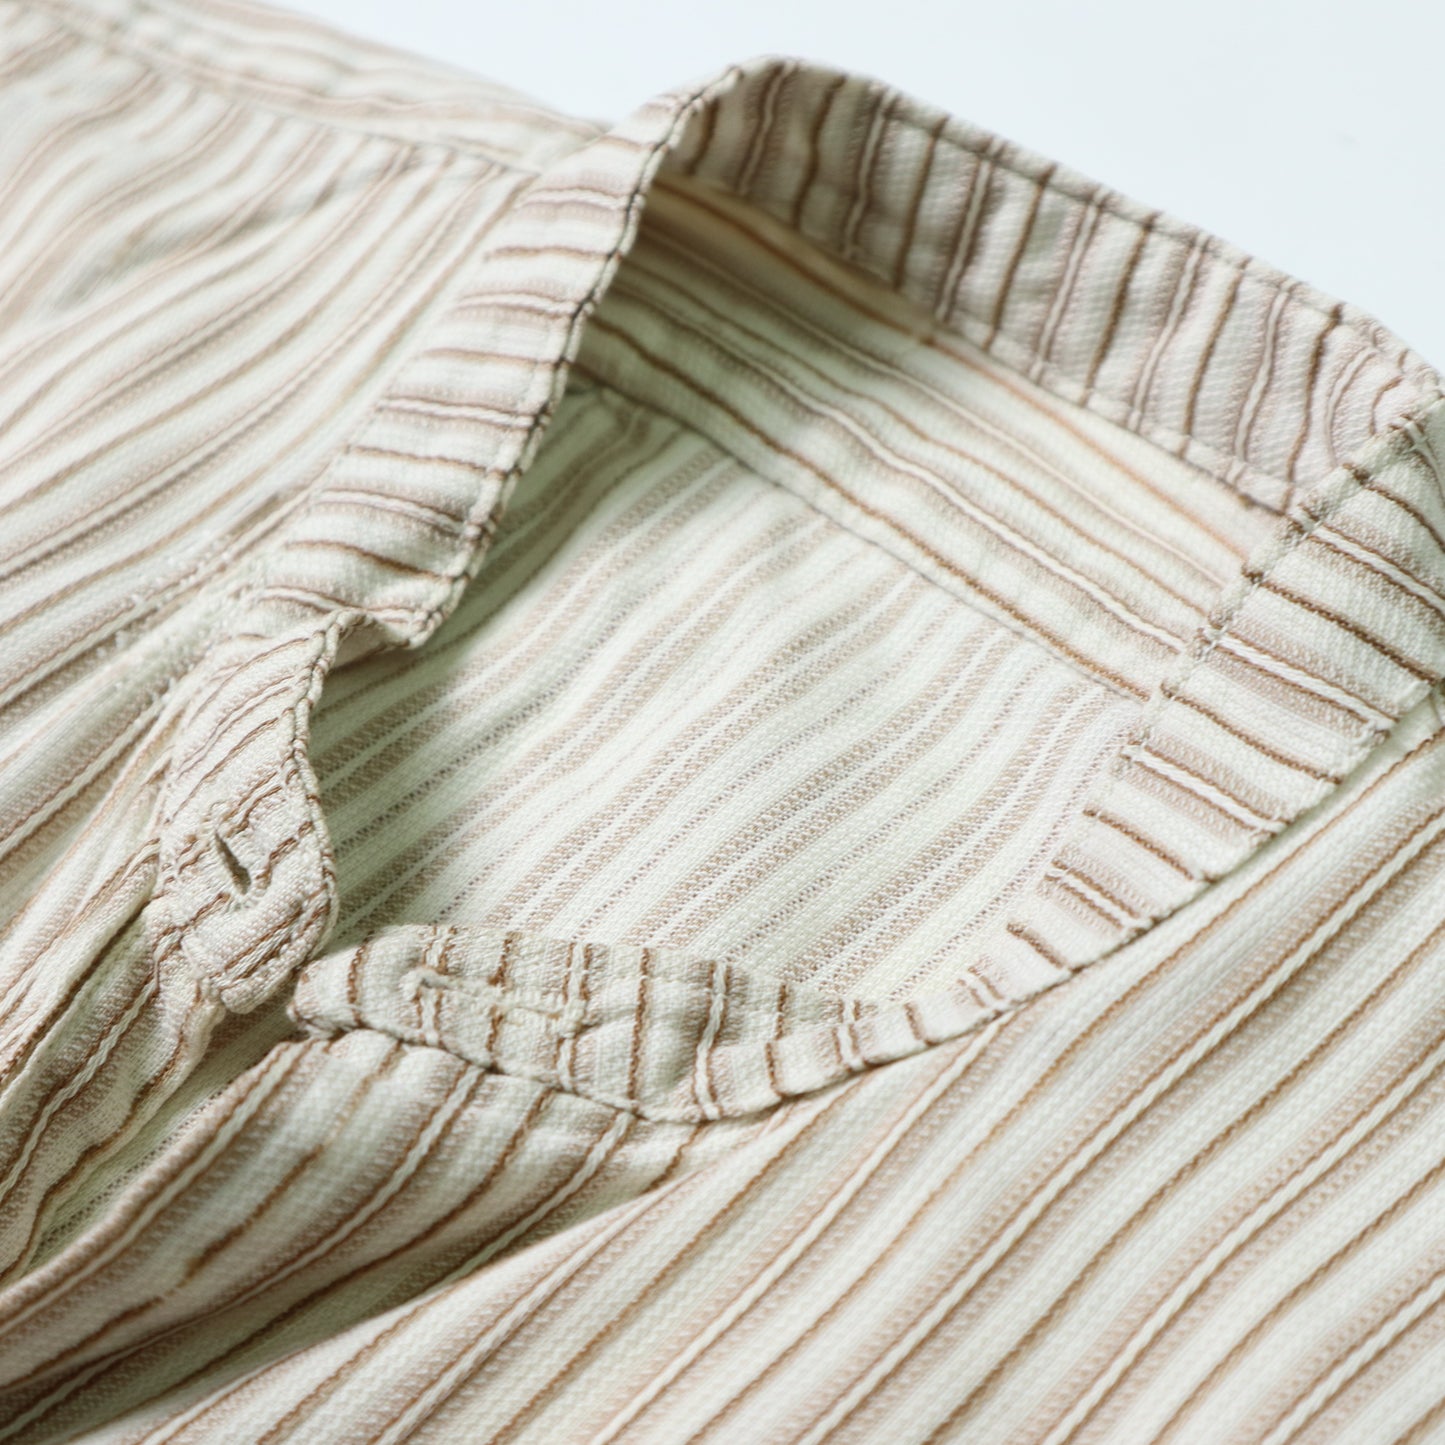 1930s 法國米白條紋工作襯衫